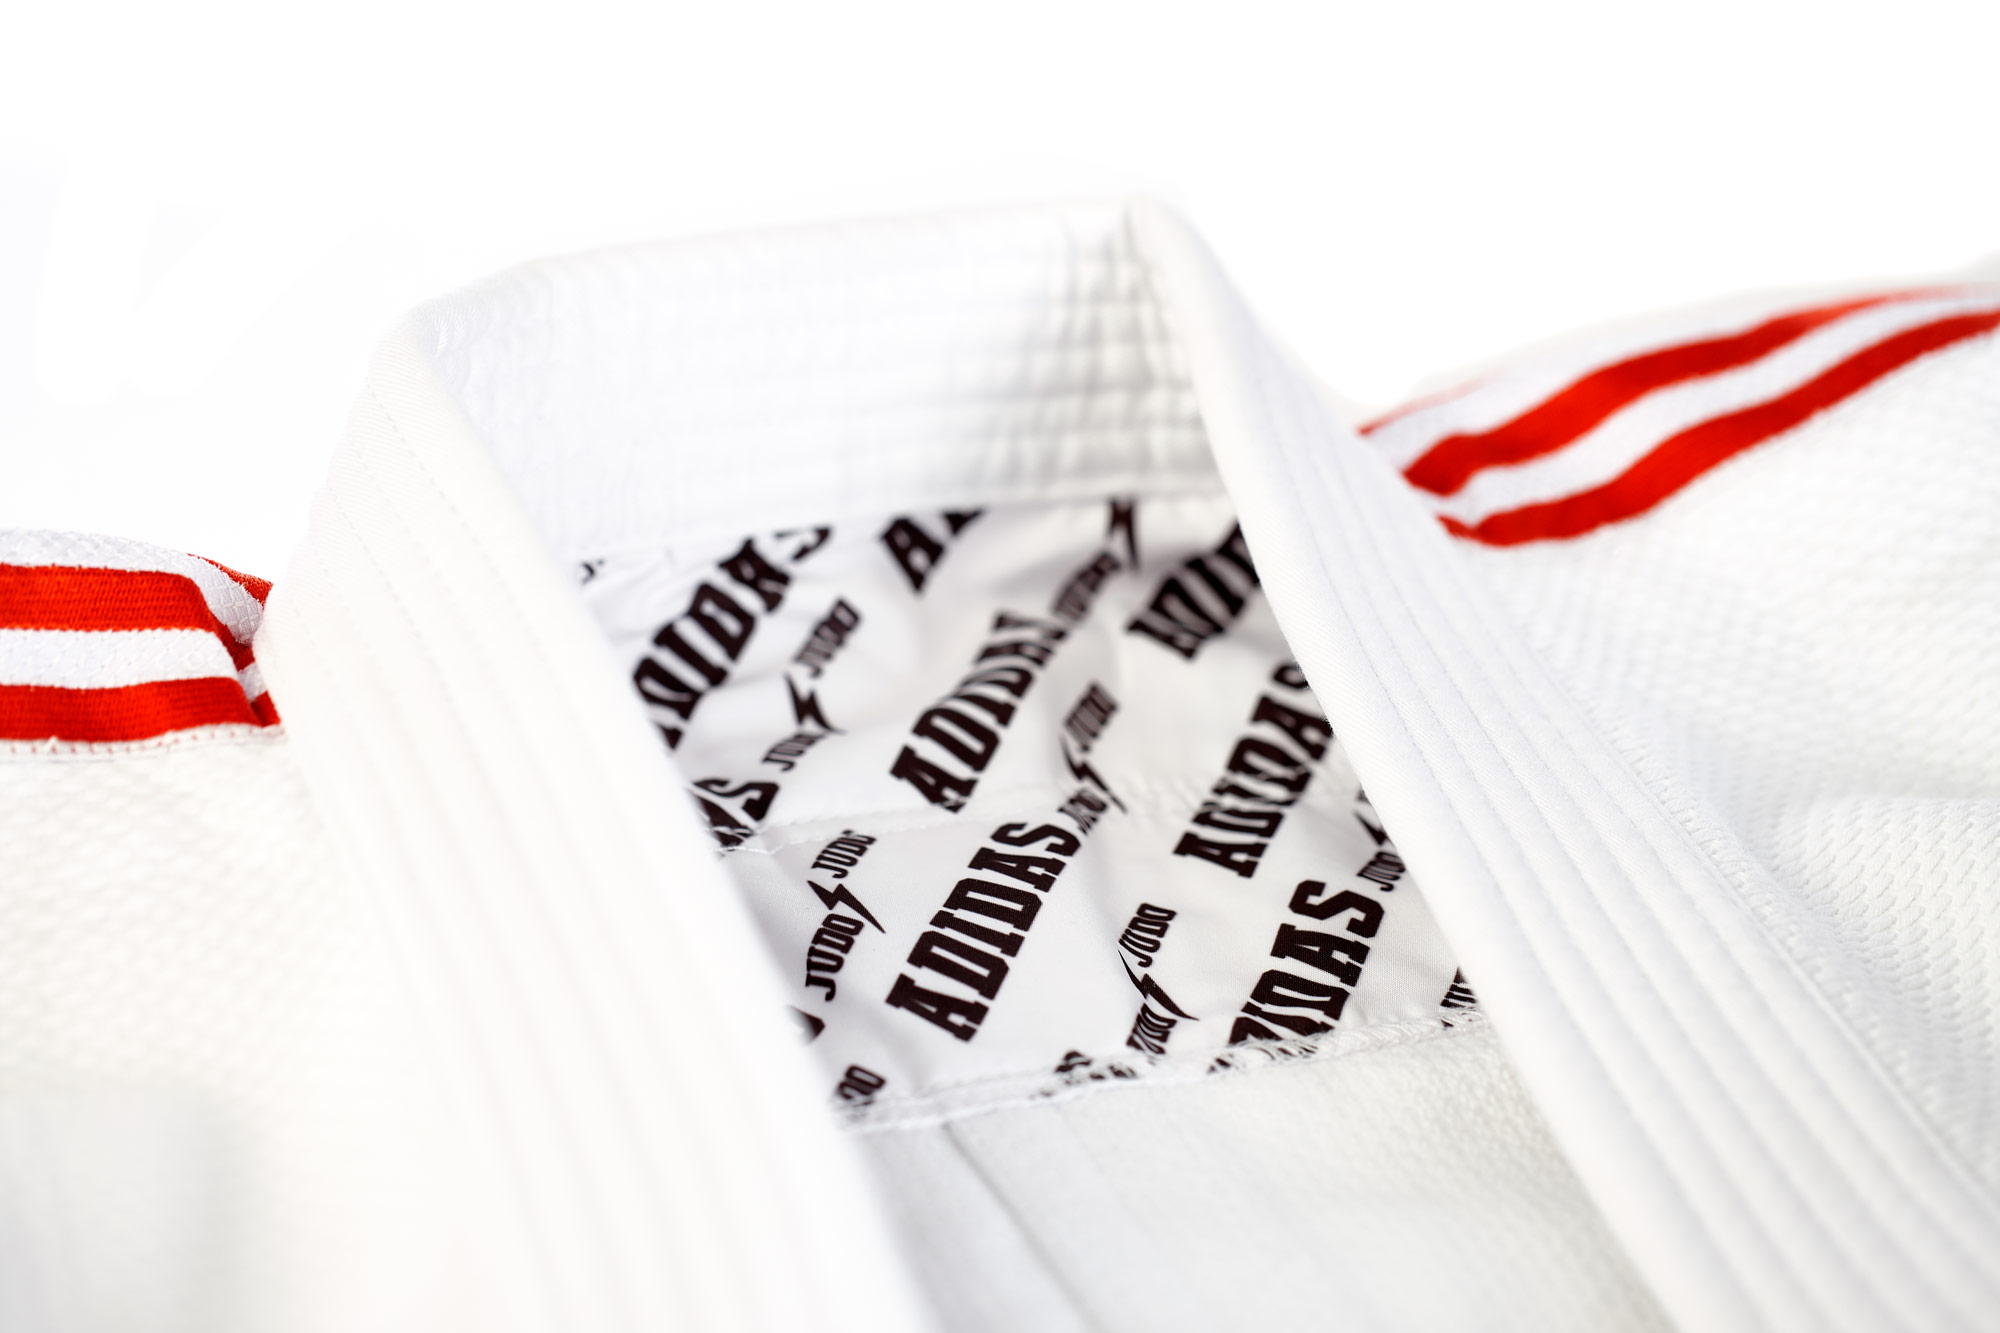 adidas judo gi Quest JJ660 white / red stripes